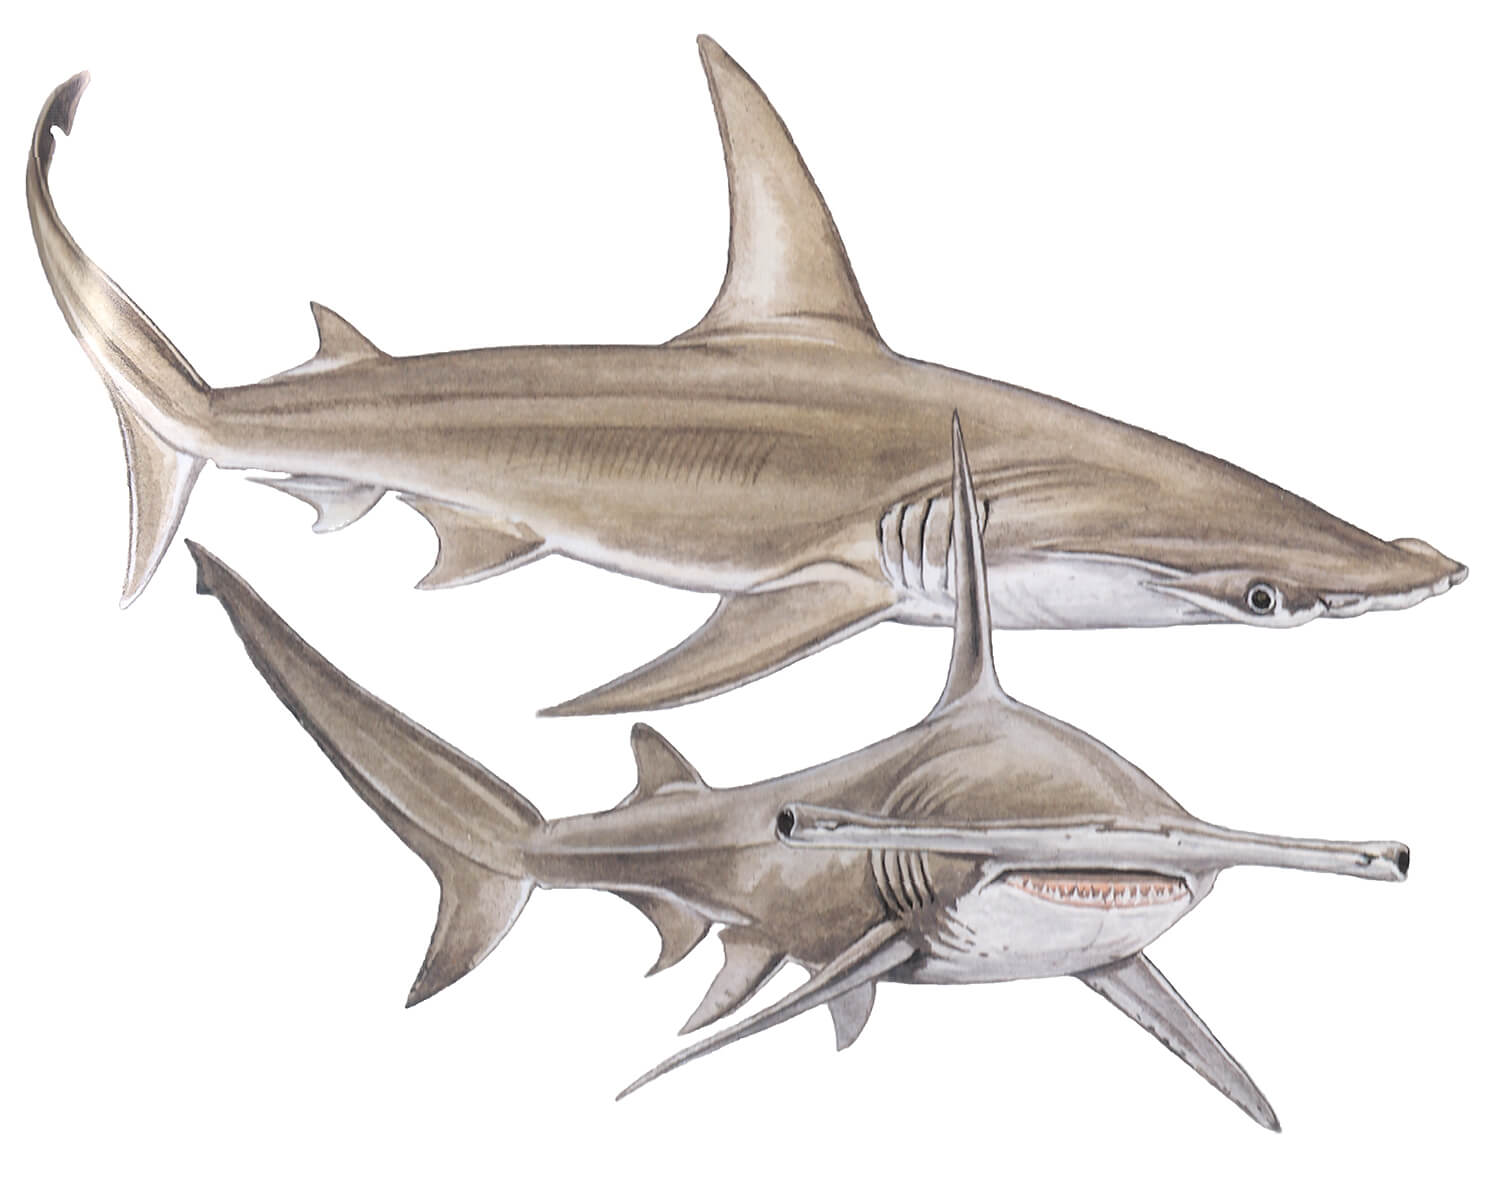 Great hammerhead shark - Sphyrna mokarran — Shark Research Institute